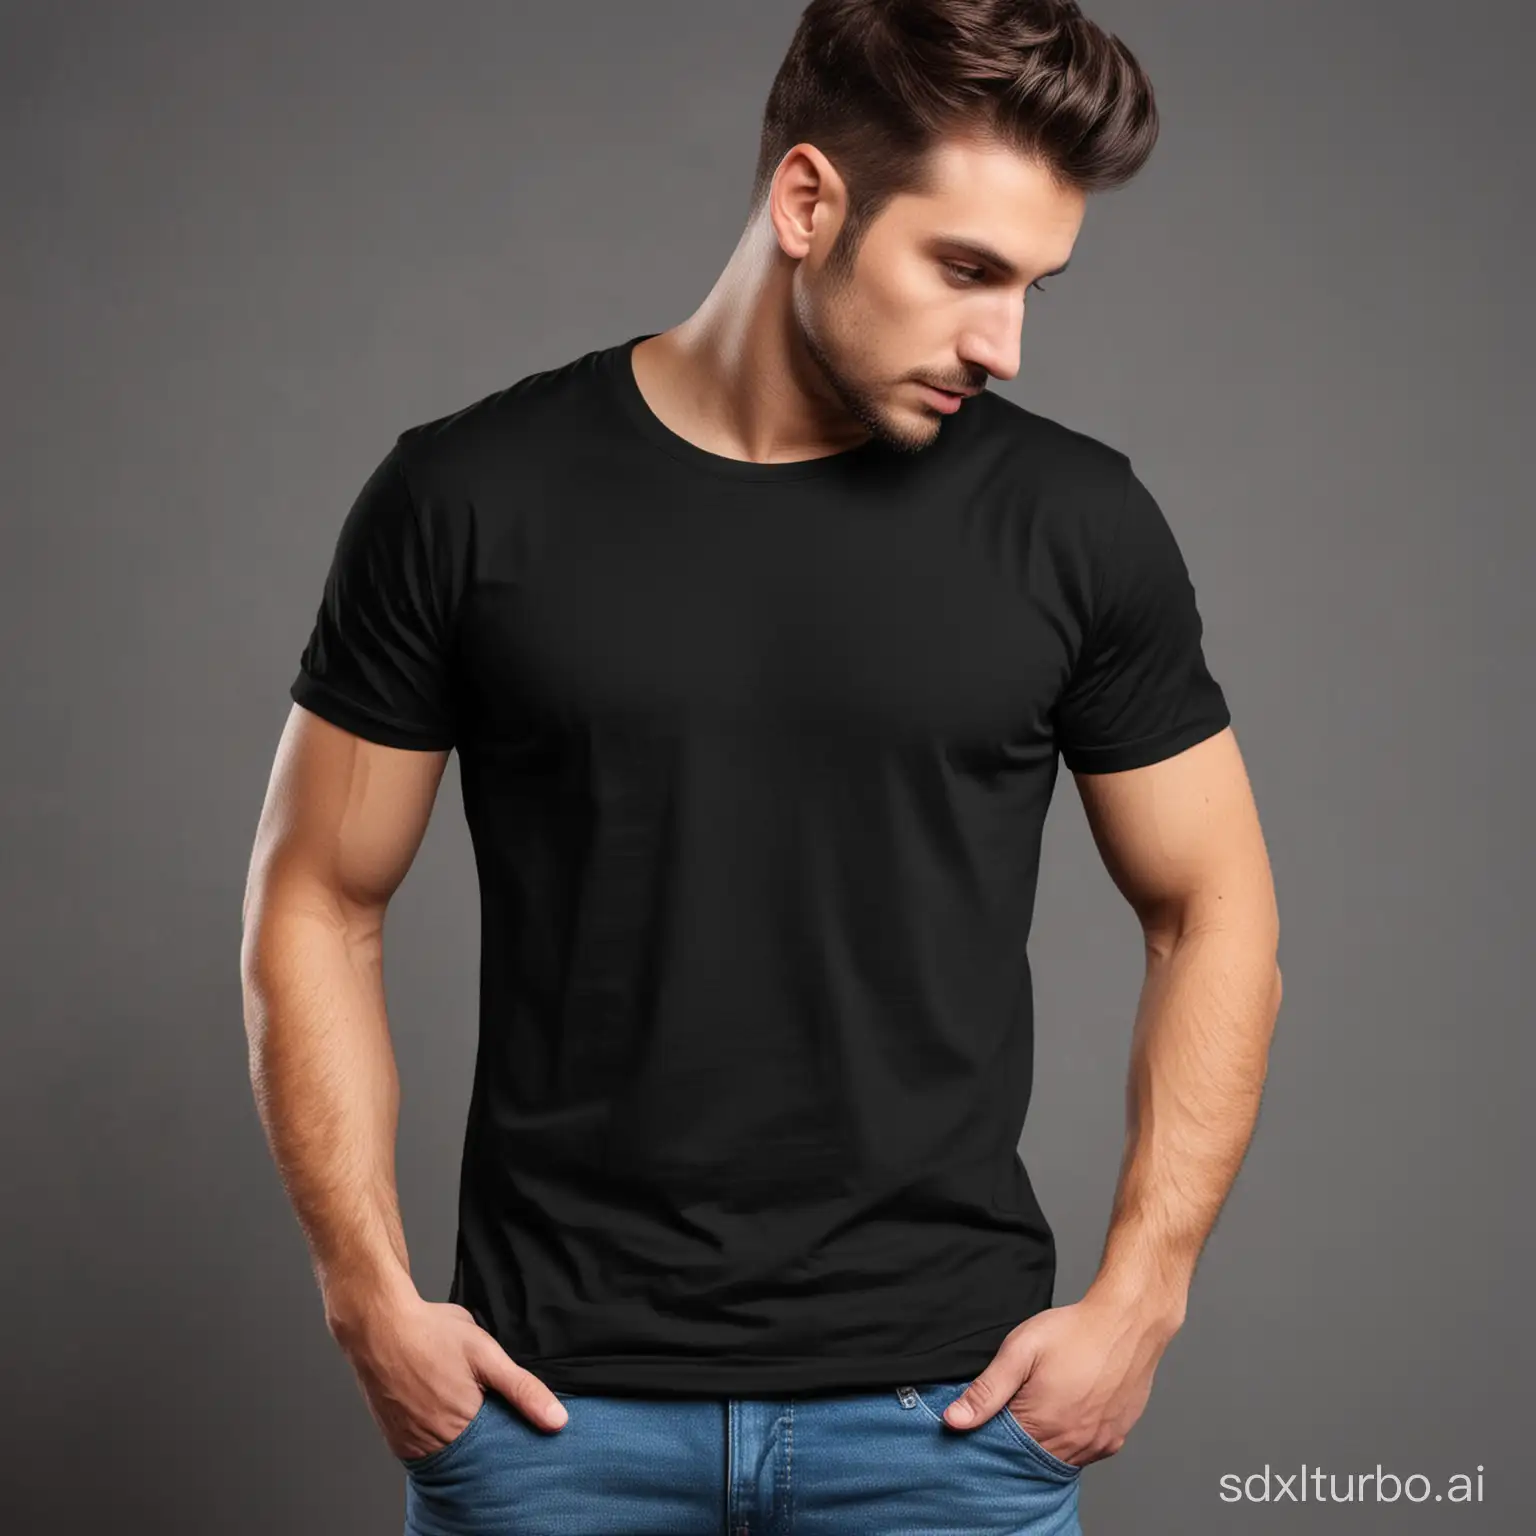 Versatile-Blank-Black-TShirt-Mockup-for-Custom-Designs